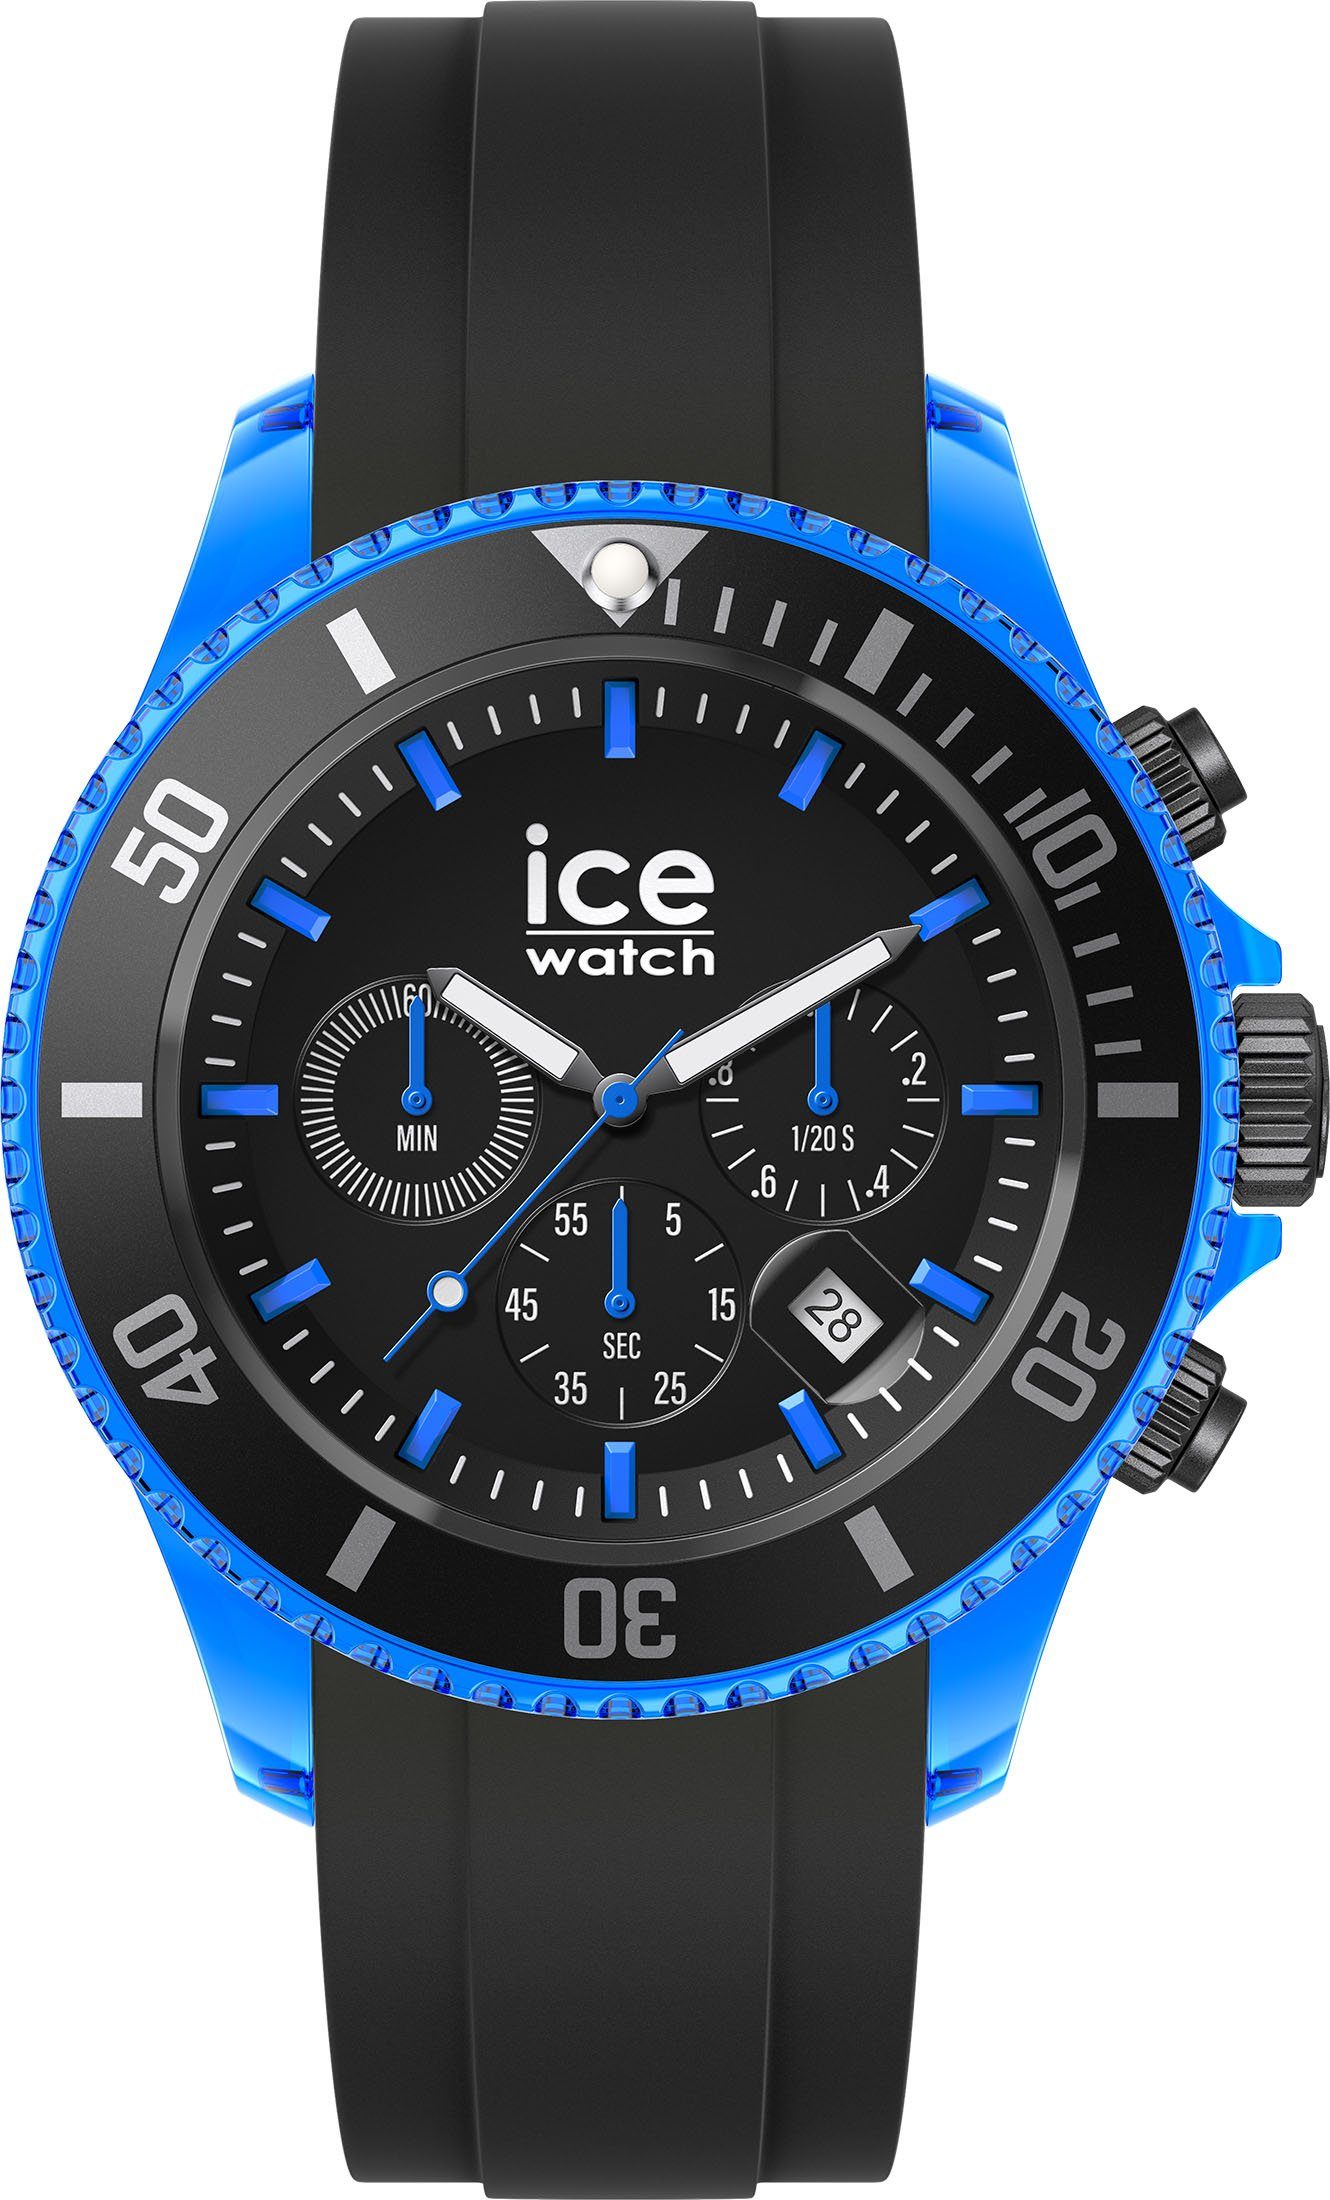 chrono blue Extra ice-watch 019844 - Black large - Chronograph - CH, ICE